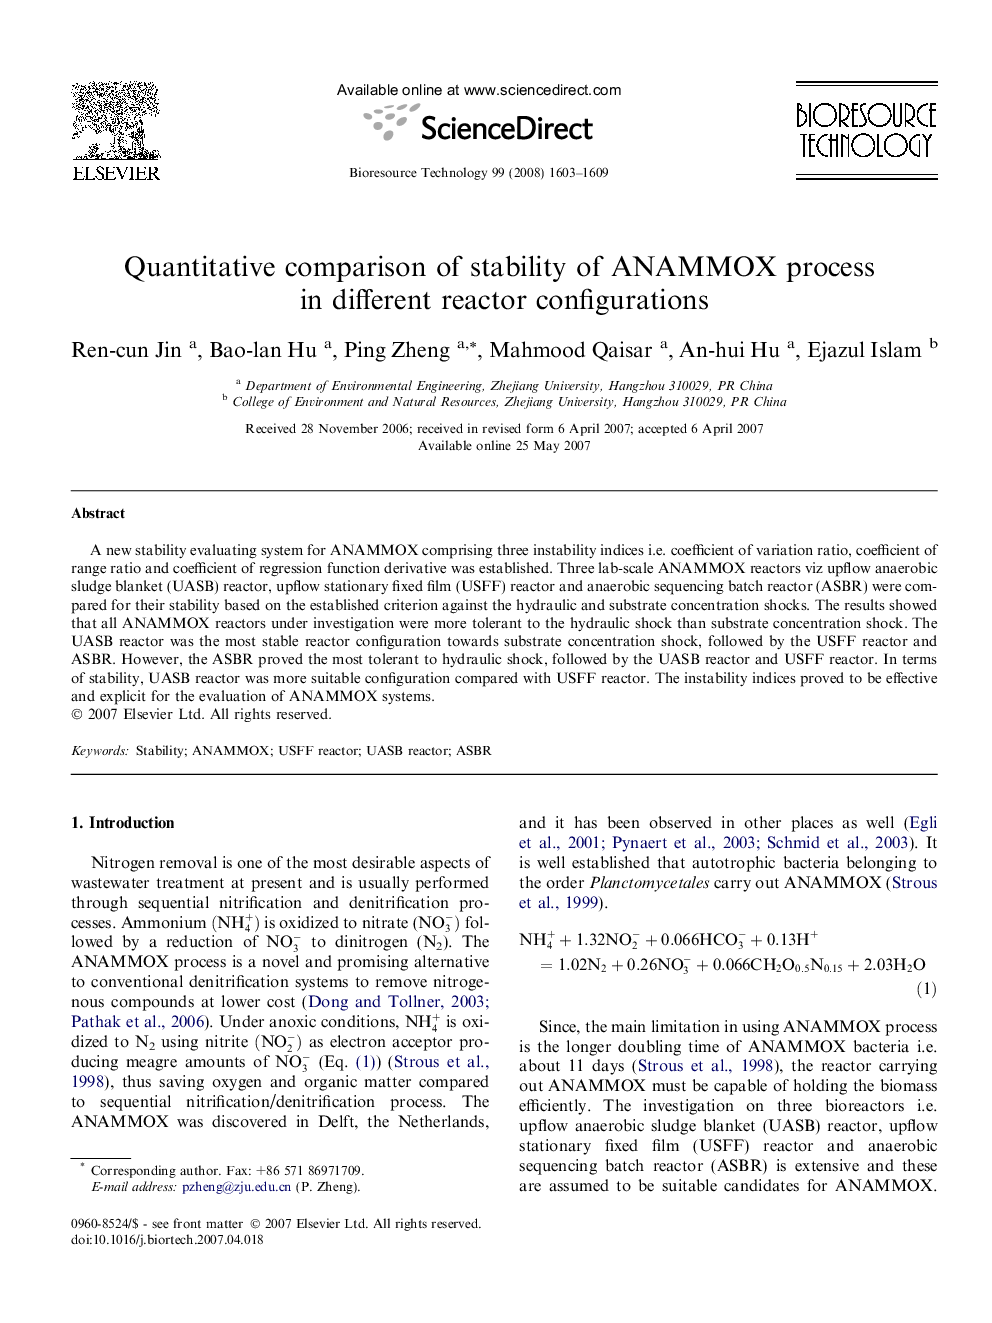 Quantitative comparison of stability of ANAMMOX process in different reactor configurations